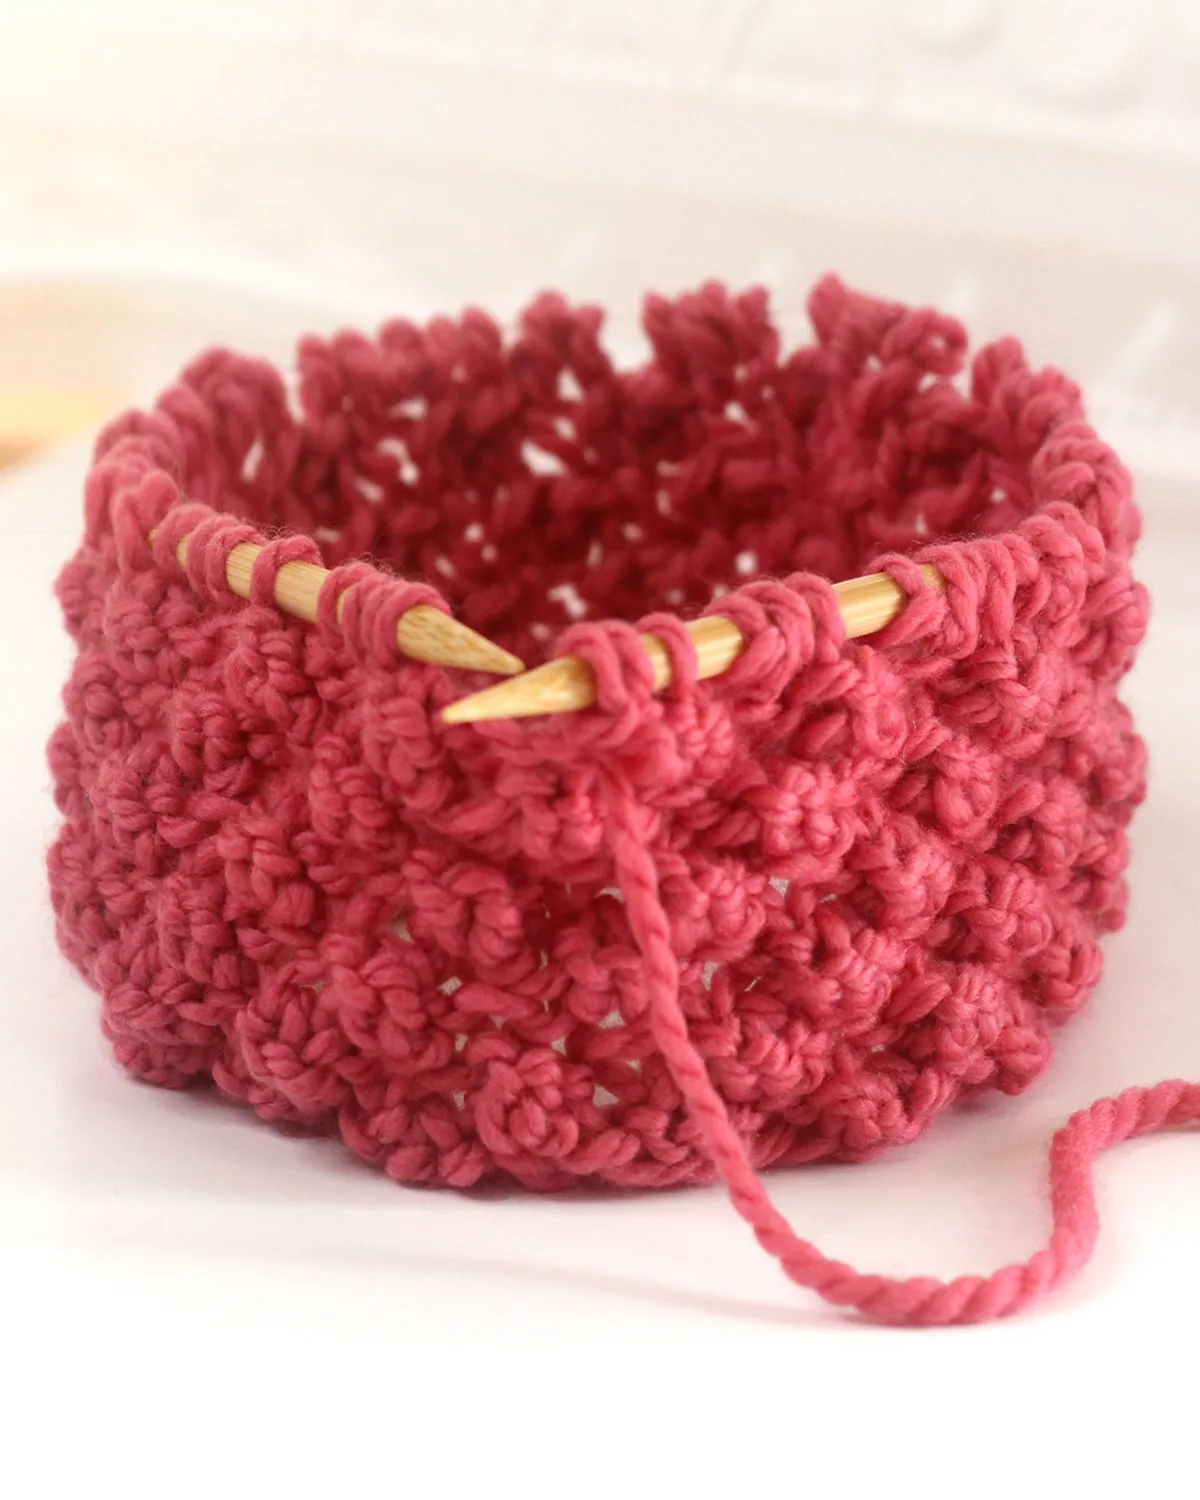 Raspberry knit stitch on circular bamboo needles with dark pink colored yarn.